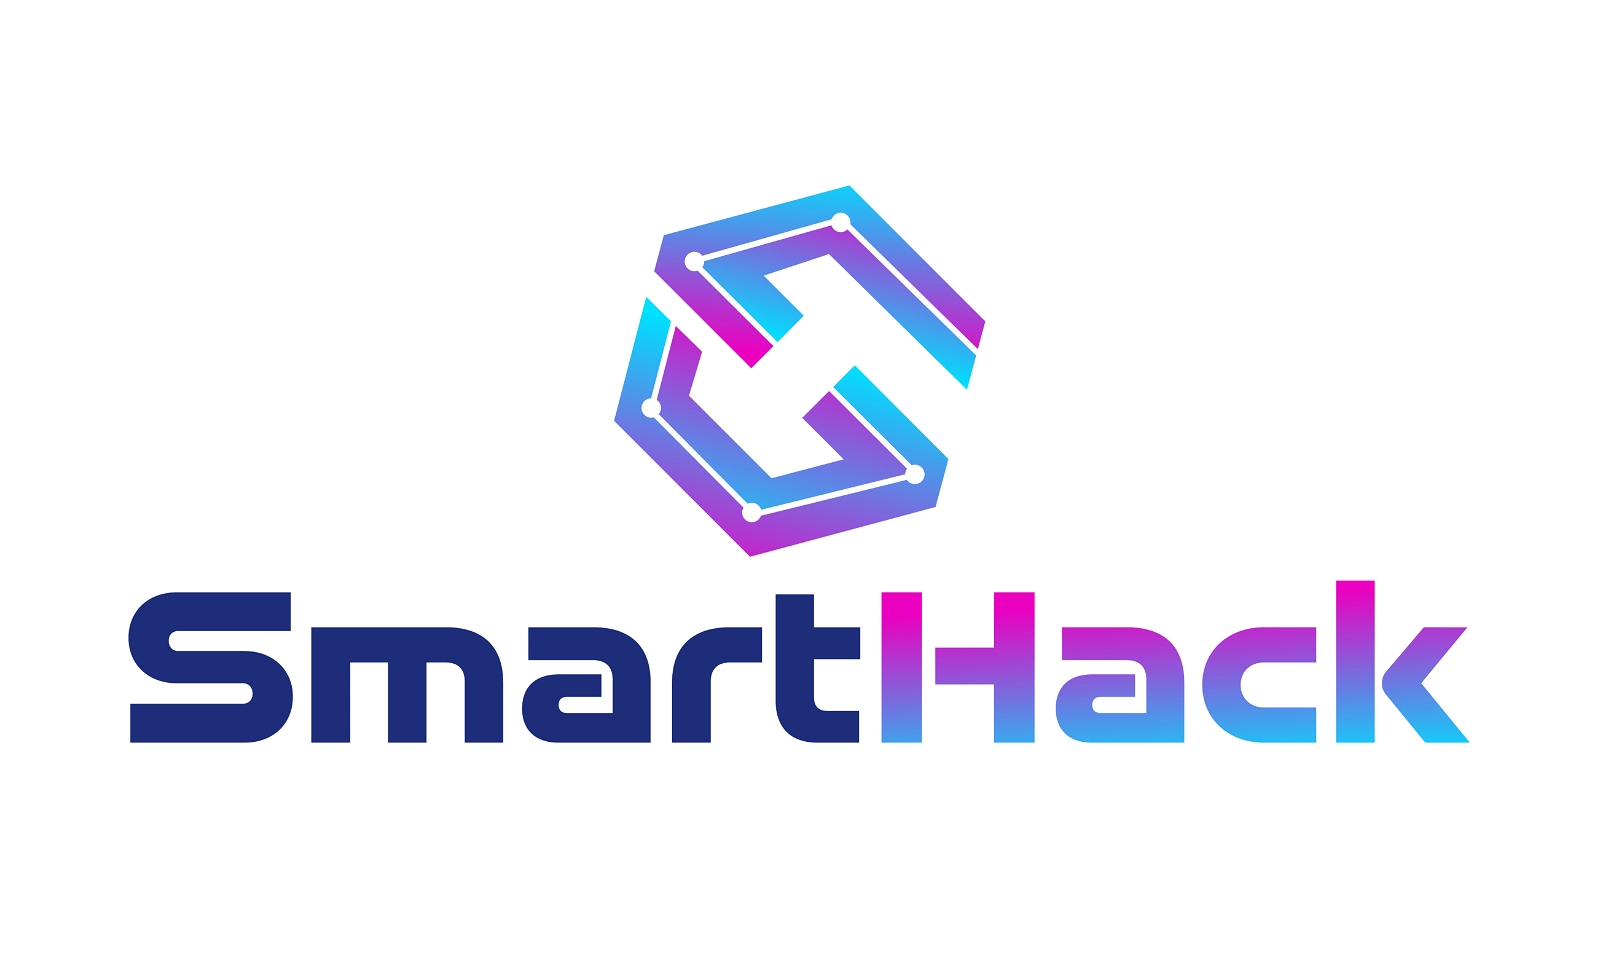 SmartHack.com - Creative brandable domain for sale